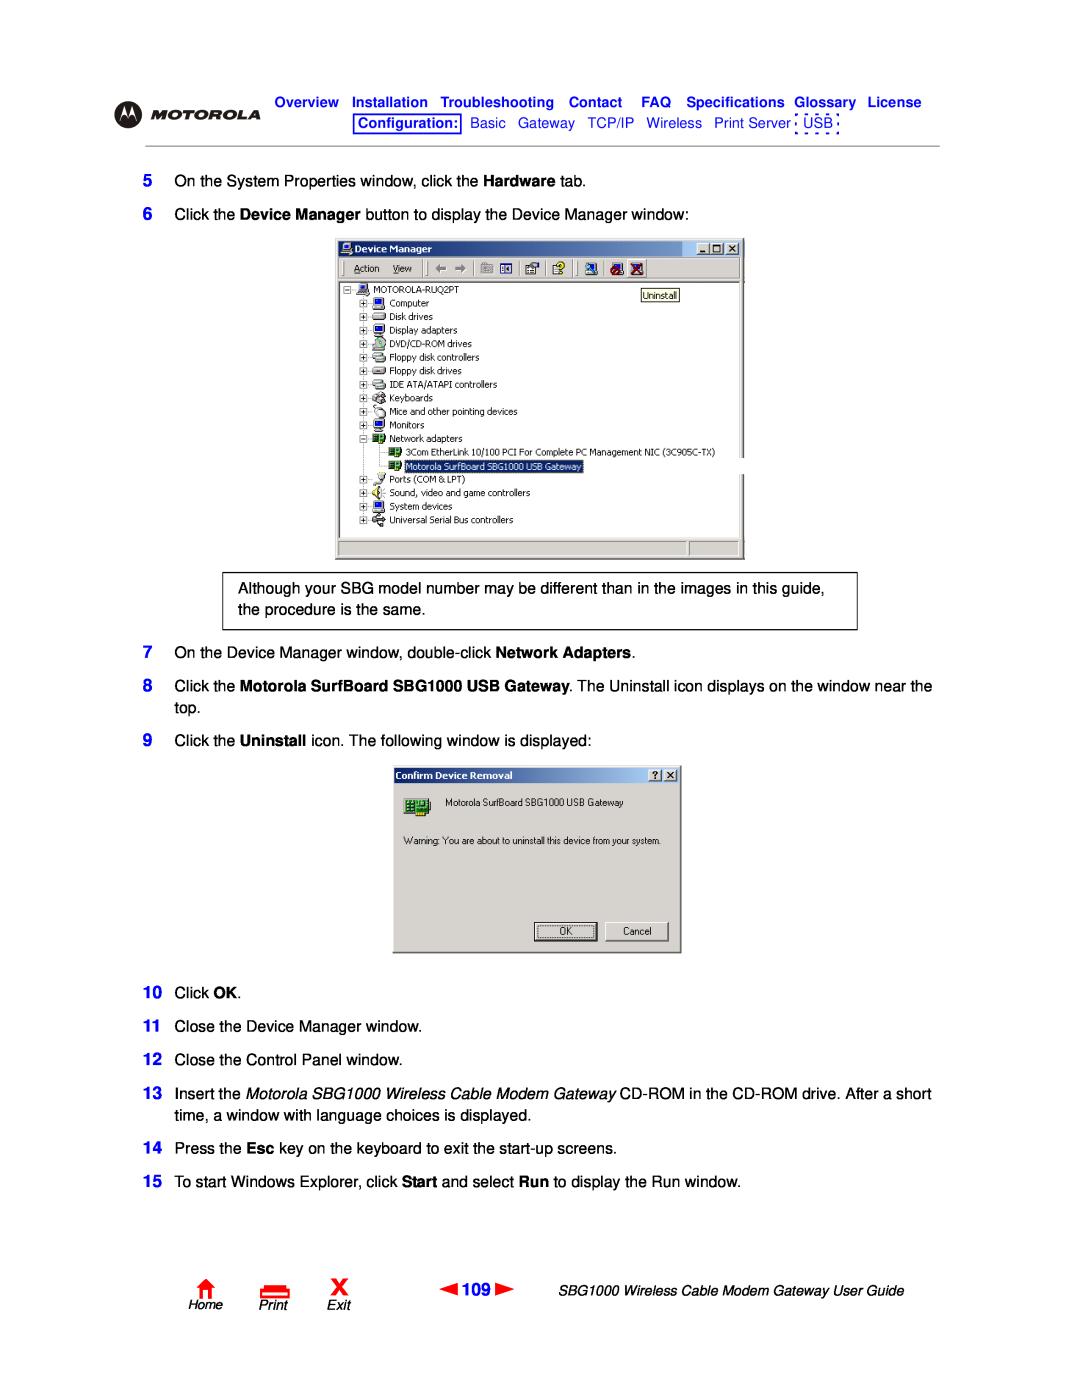 Motorola SBG1000 manual On the System Properties window, click the Hardware tab 